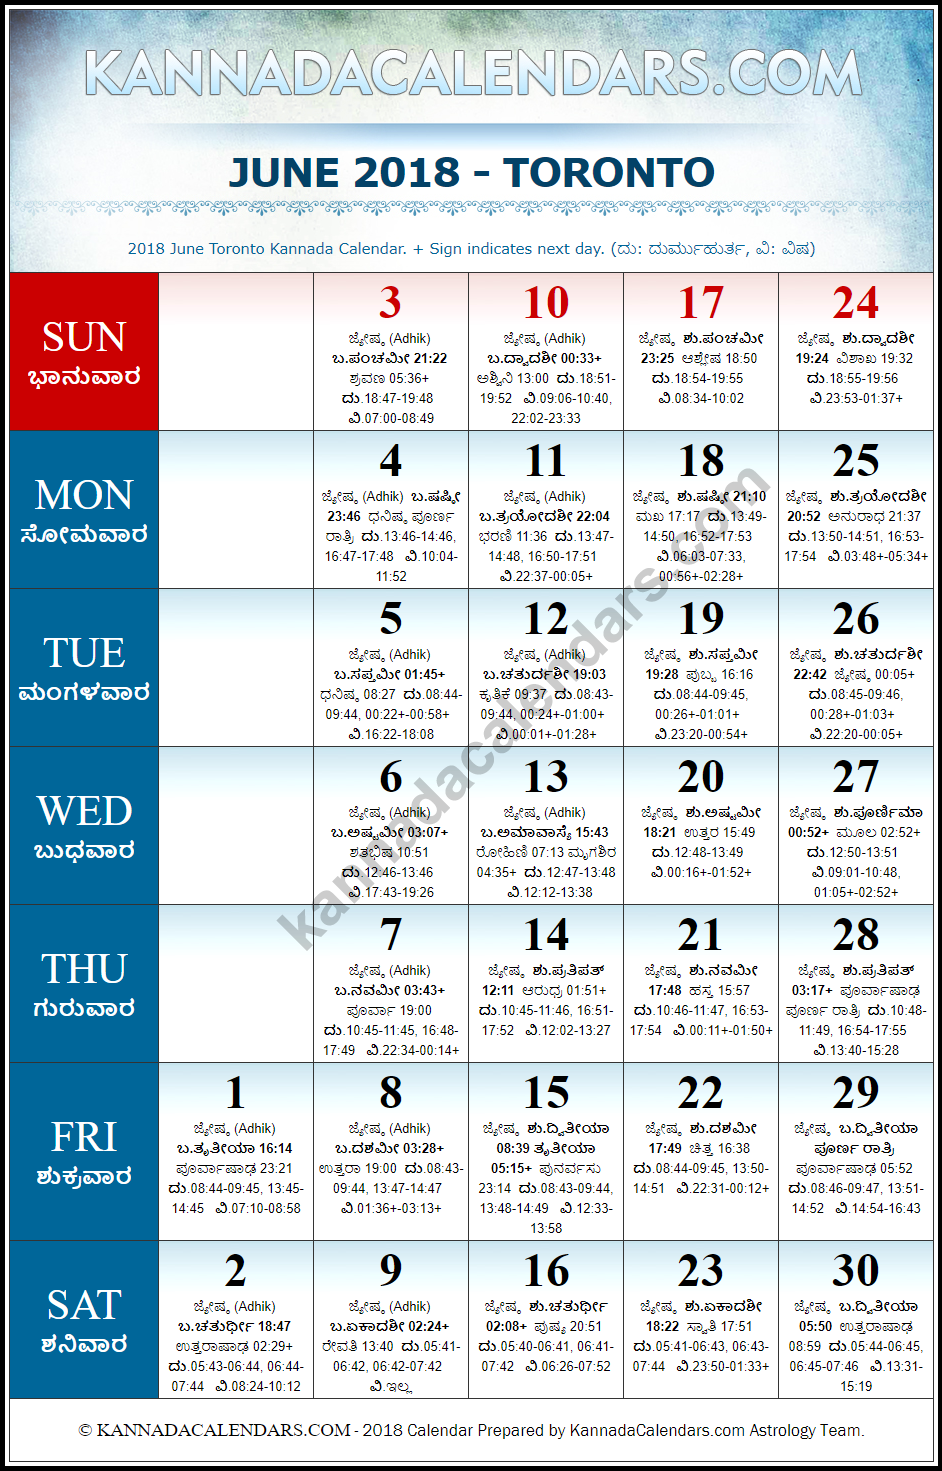 June 2018 Kannada Calendar for Toronto, Canada